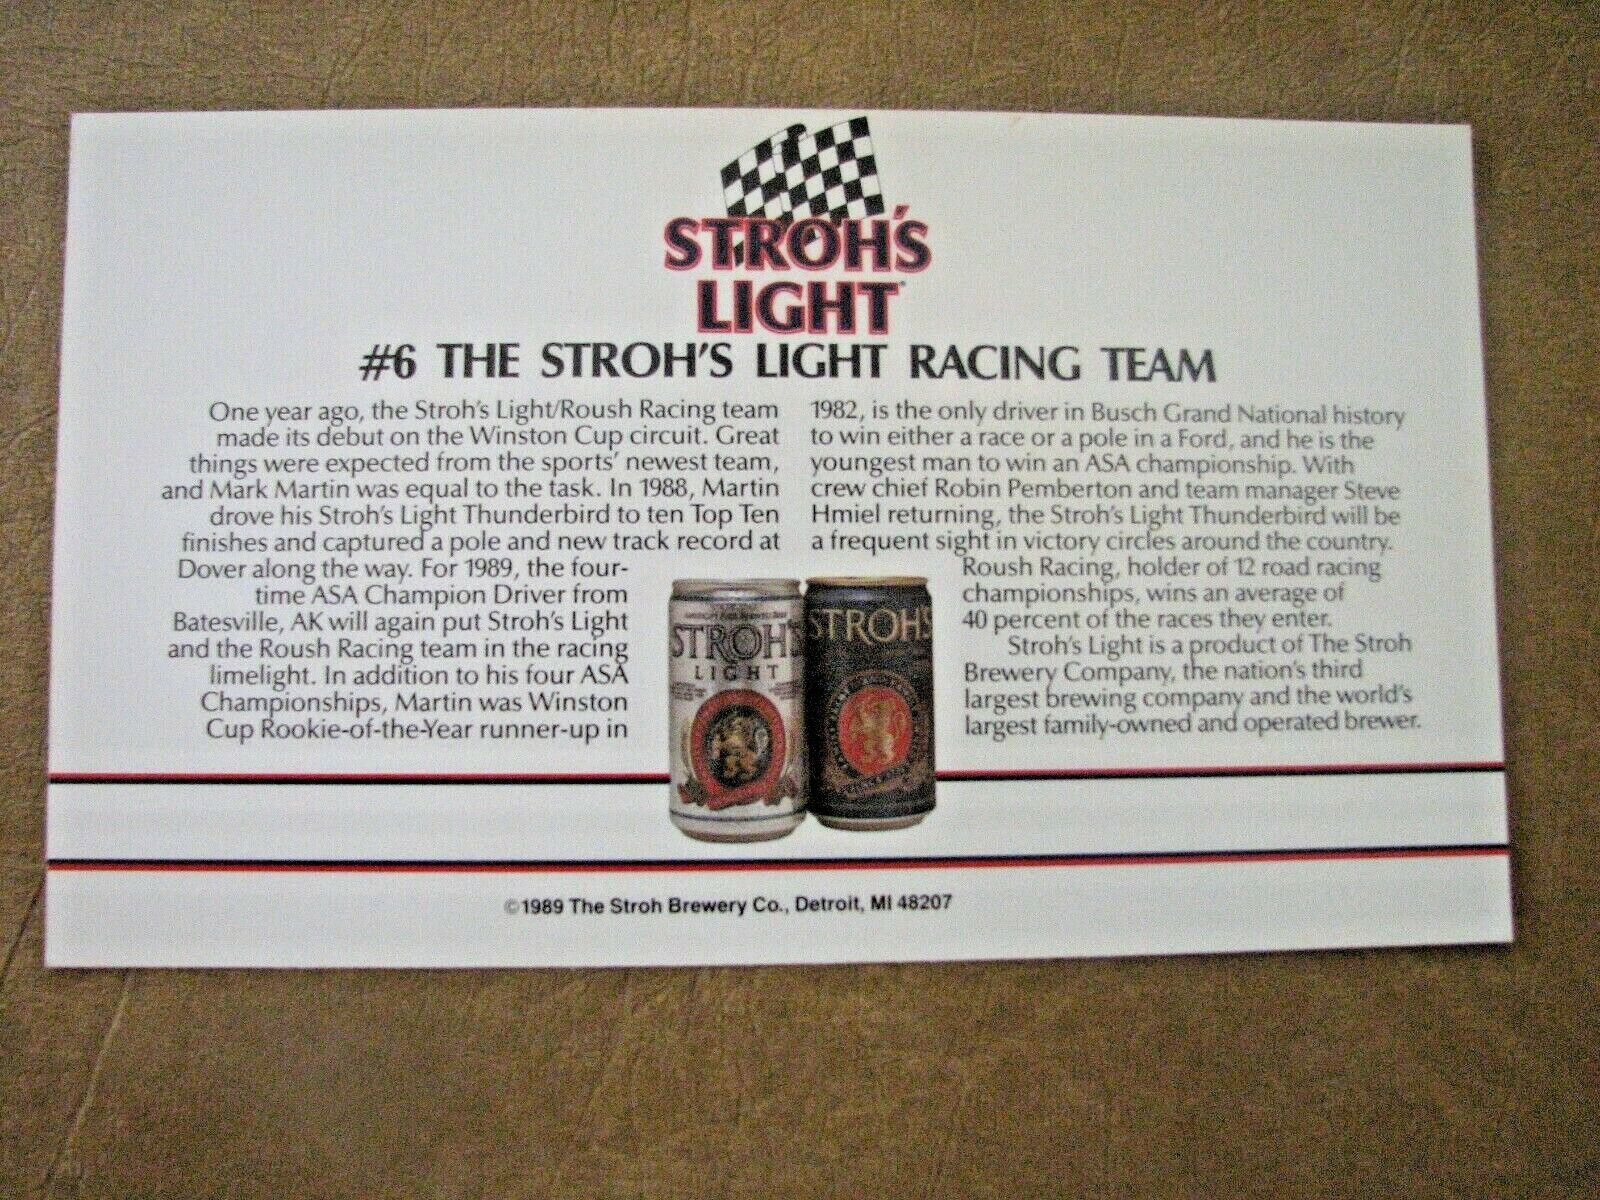 1989 Stroh's Mark Martin #6 Racing Team Photo Card 2 Sided (6 ea in a set) $5.00 Без бренда - фотография #6